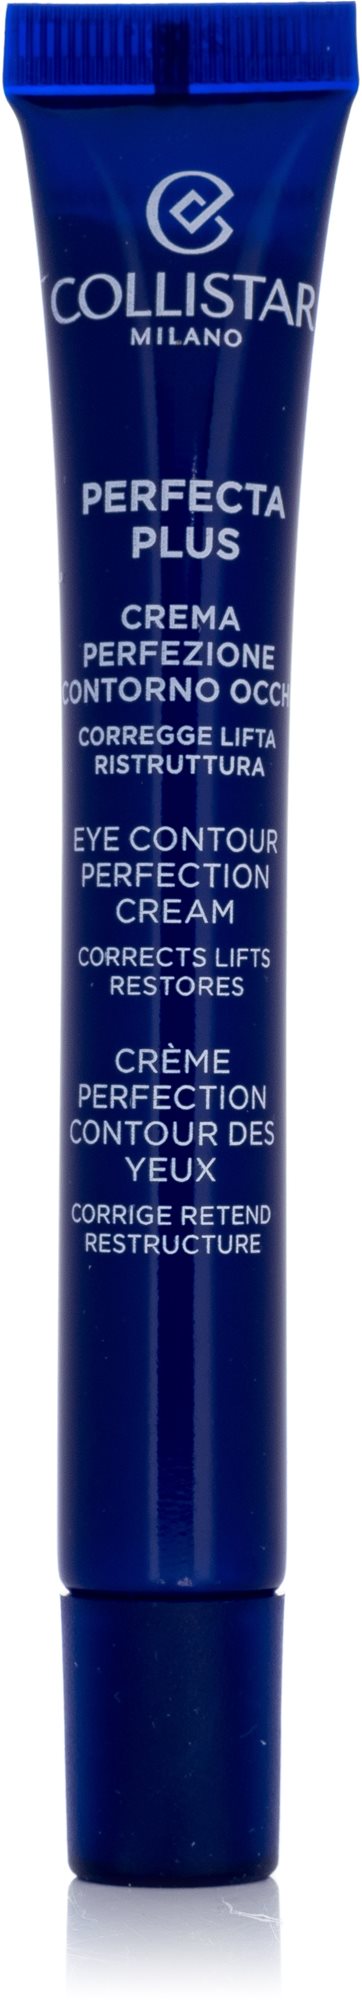 COLLISTAR Perfecta Plus Eye Contour Perfection Cream 15 ml